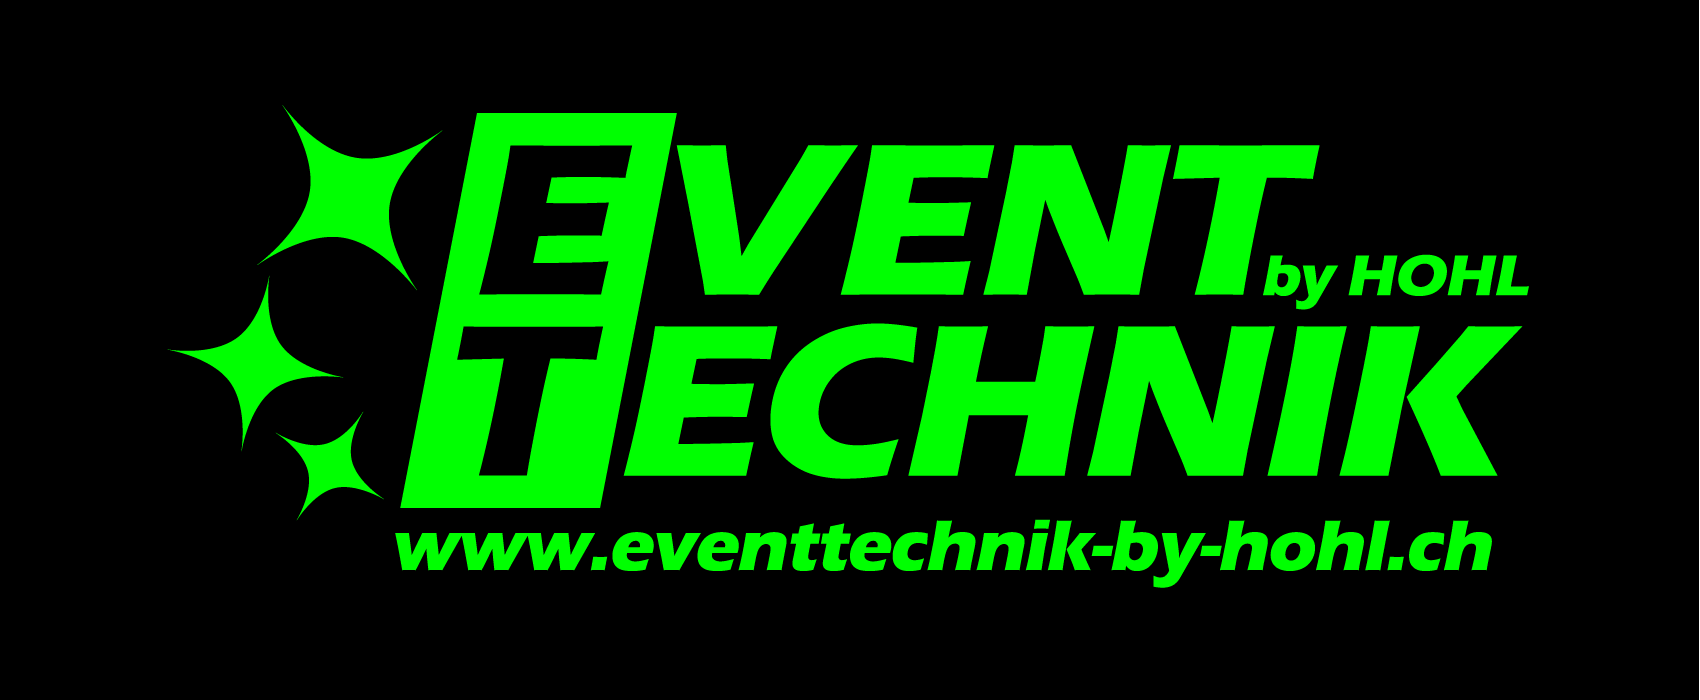 Logo EventTechnik RGB (Homepage)